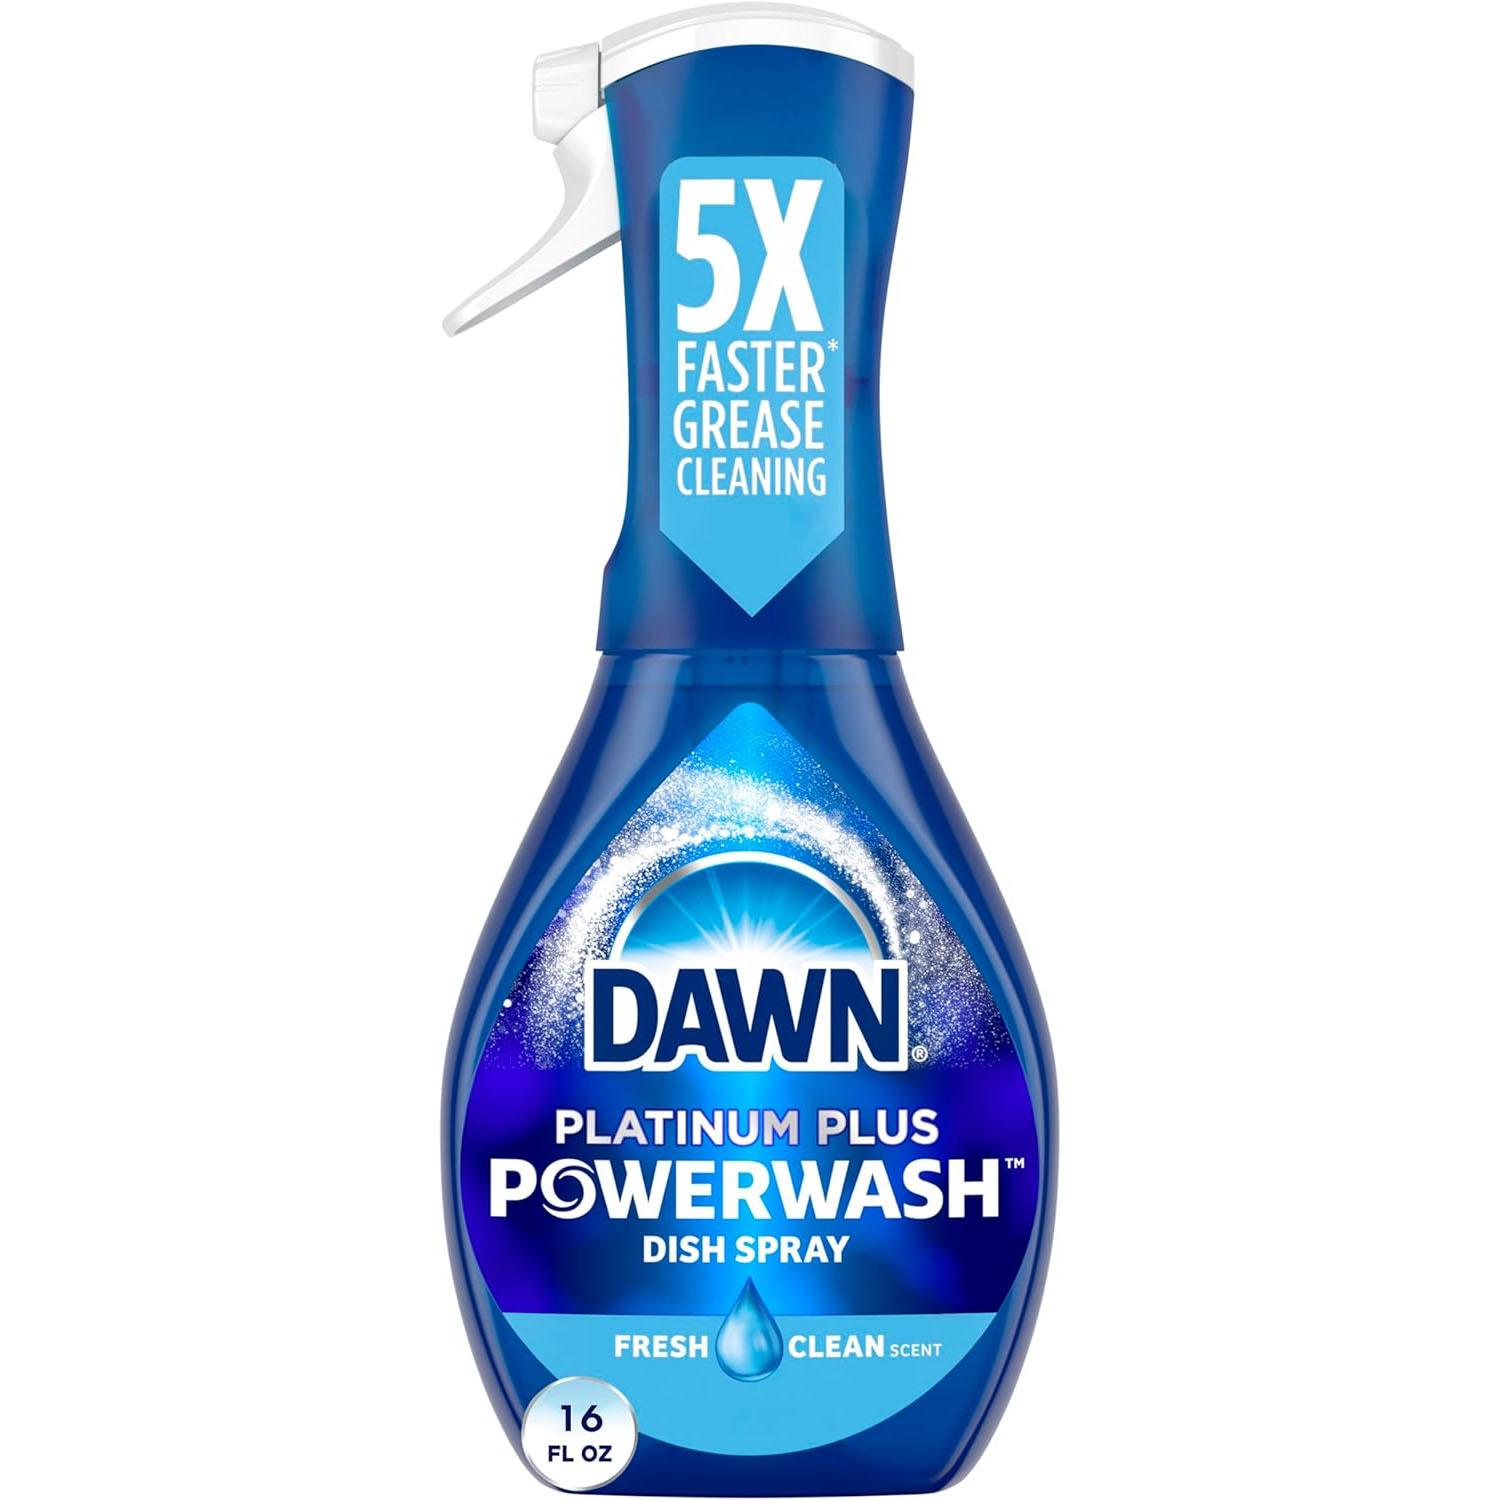 Dawn Platinum Powerwash Dish Spray for $2.99